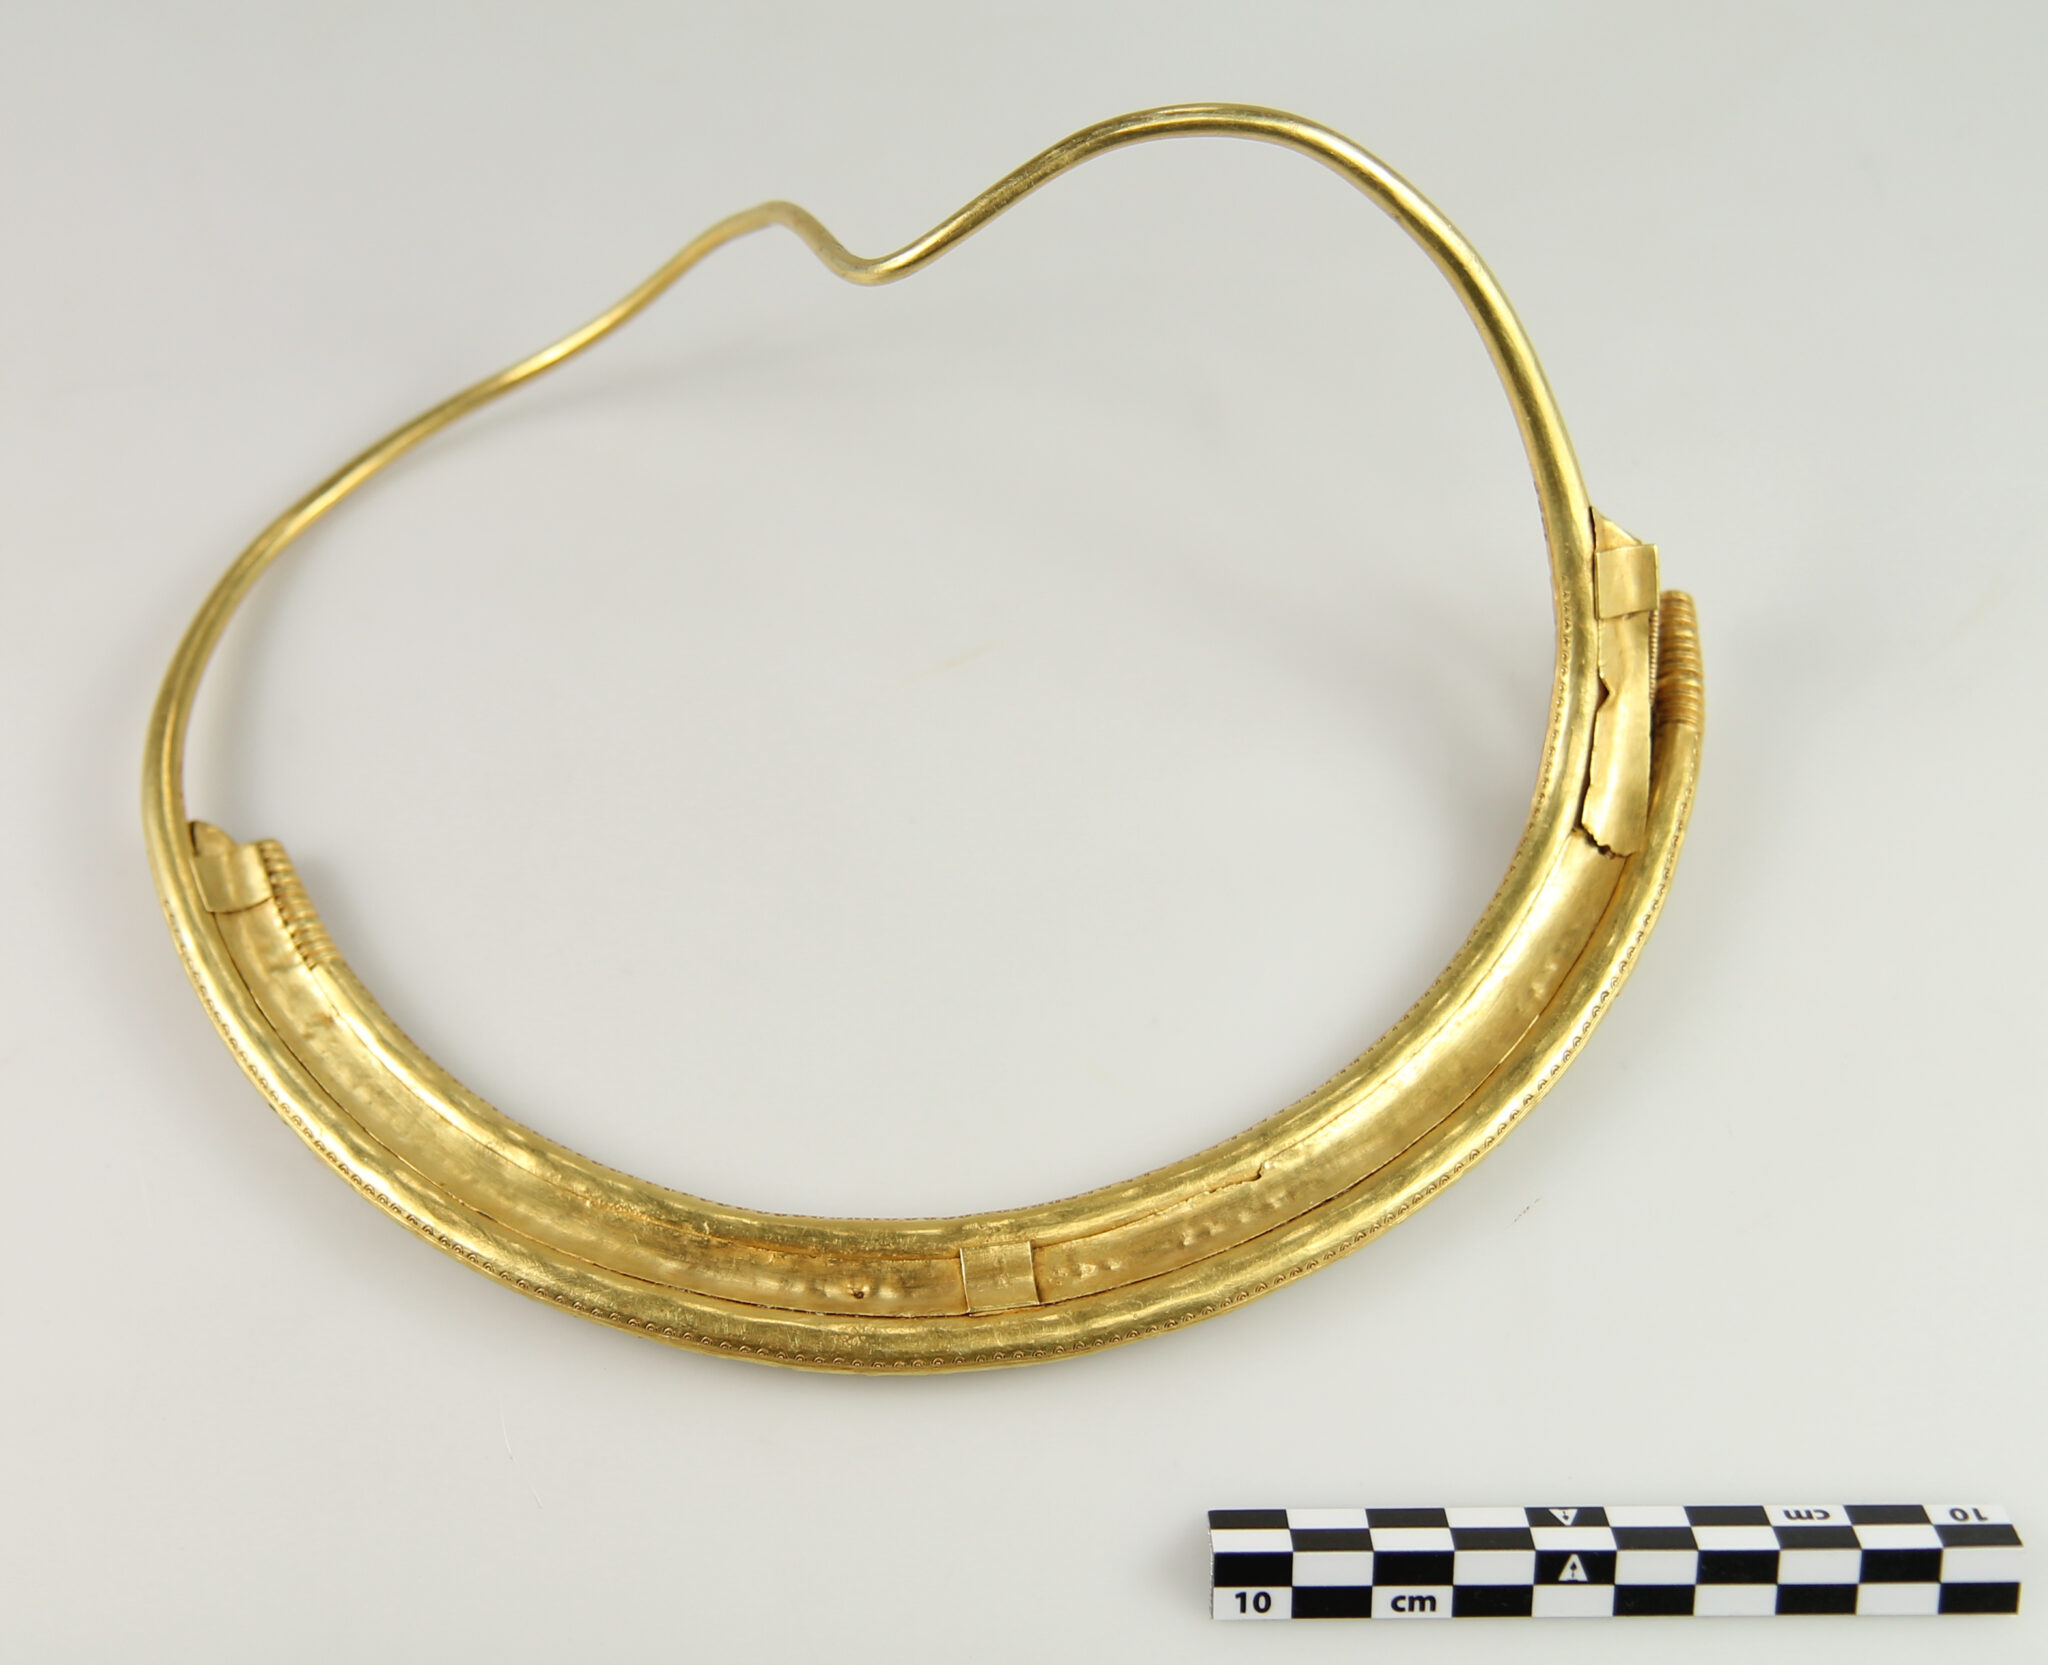 Iron Age gold neck ring found in Denmark